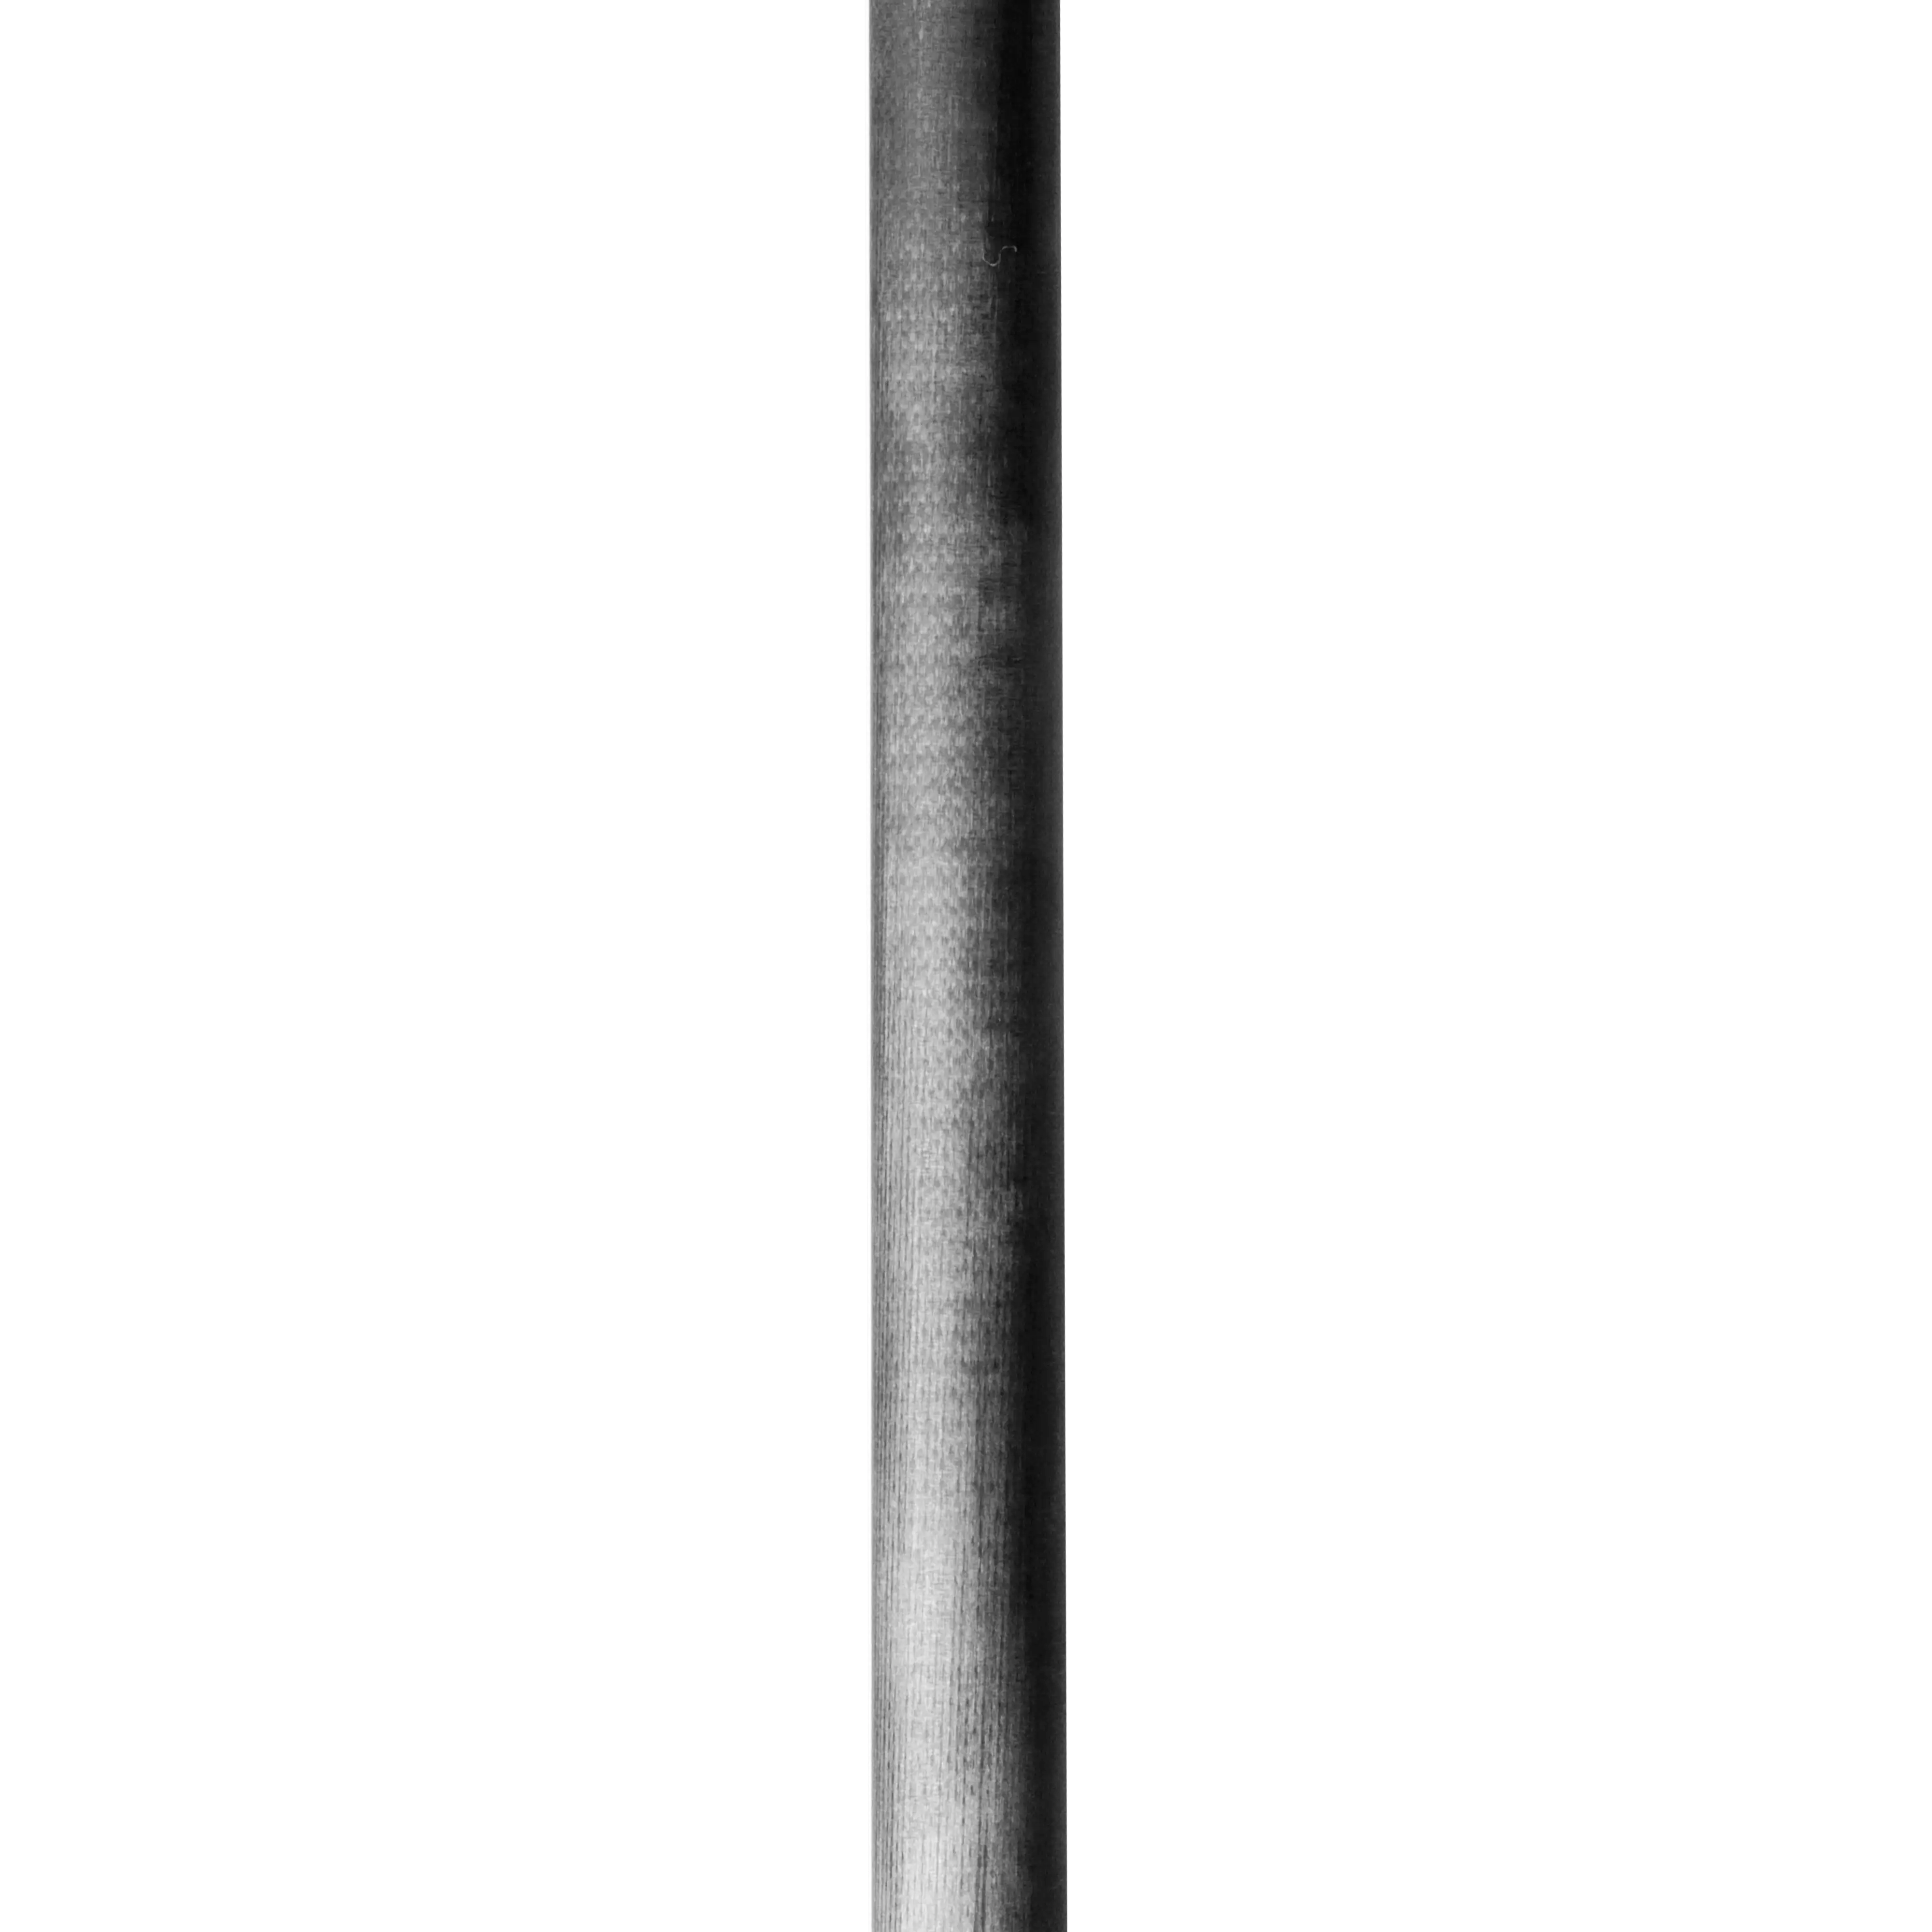 7'6" Medium Inshore & Light Saltwater Rod Blank USA76M